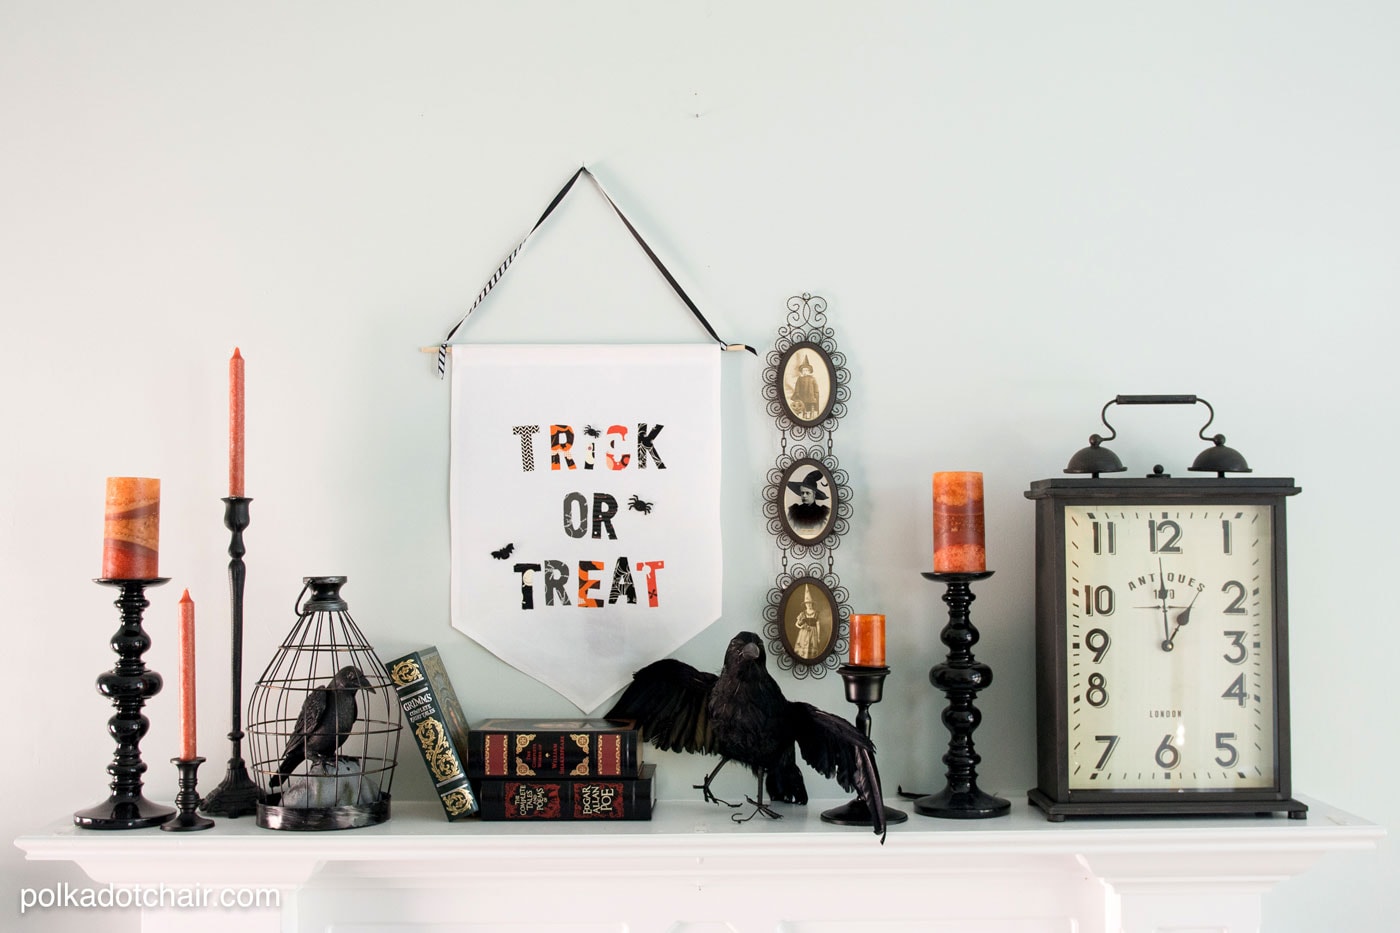 Cute Halloween Trick or Treat Fabric Banner Tutorial by Melissa of polkadotchair.com